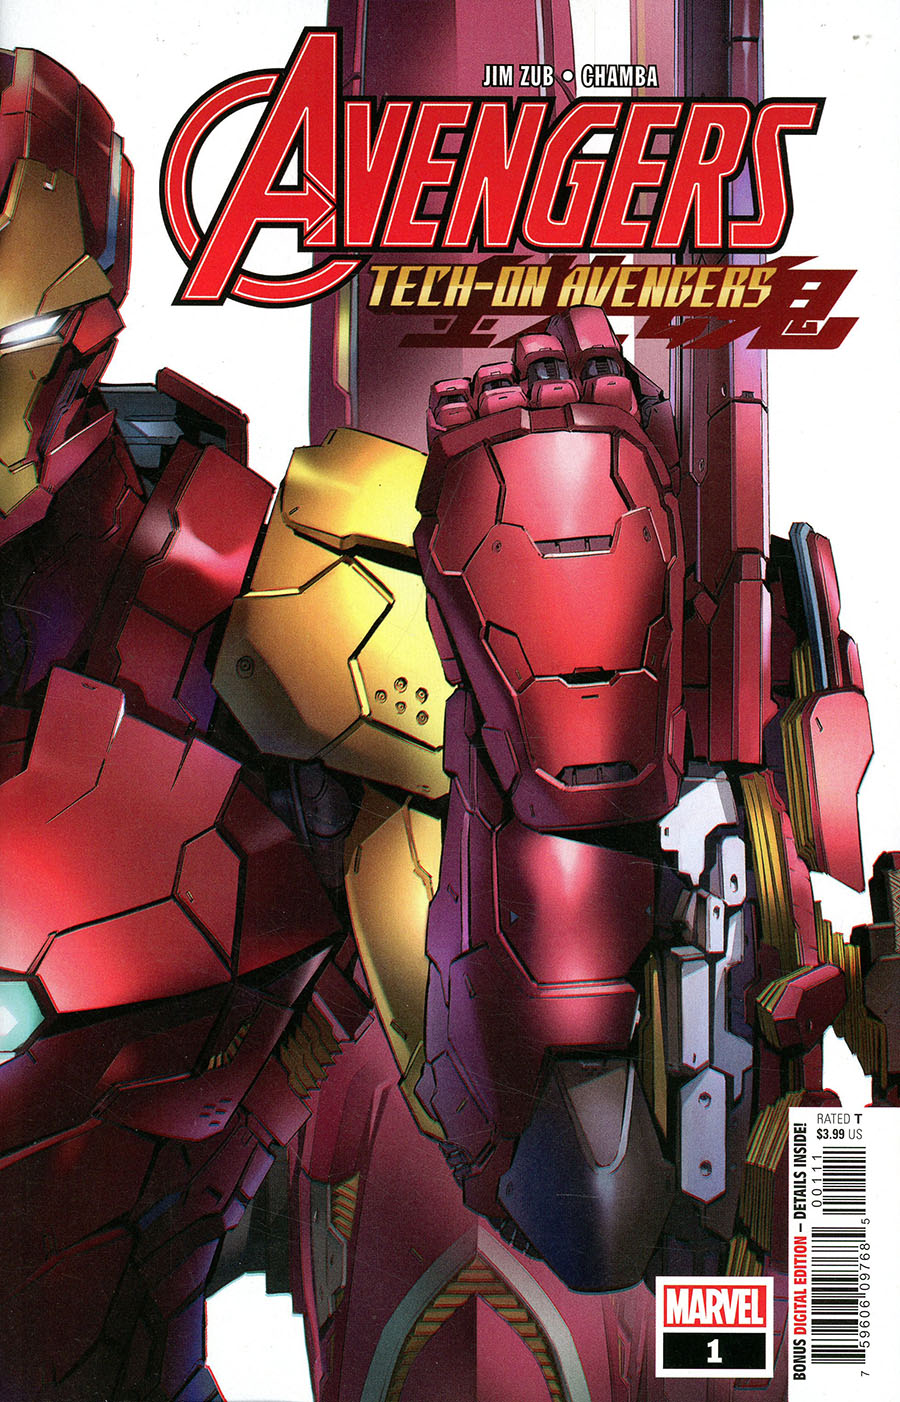 Avengers Tech-On Avengers #1 Cover A Regular Eiichi Shimizu Cover 